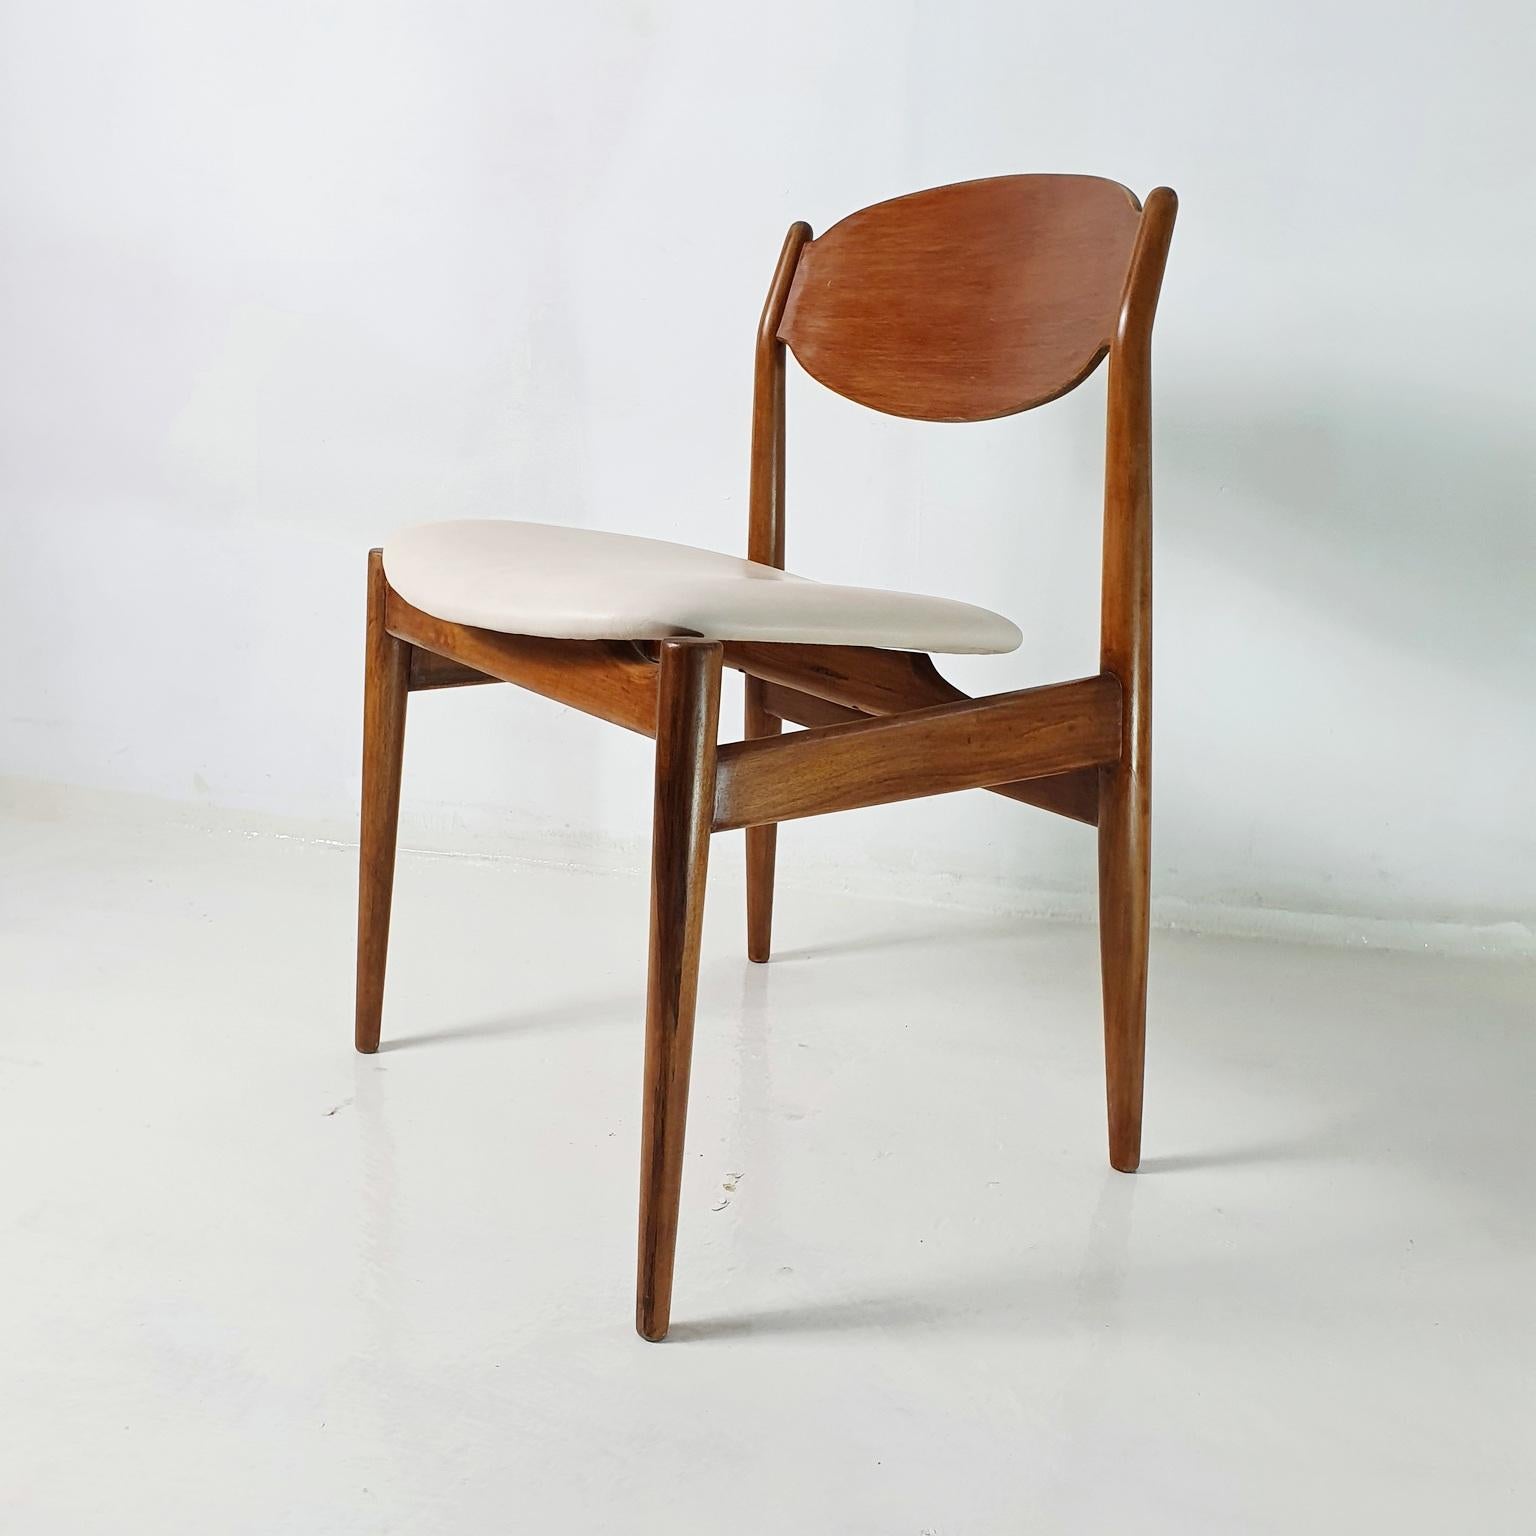 Italian Midcentury Chairs by Leonardo Fiori for ISA Bergamo Italy